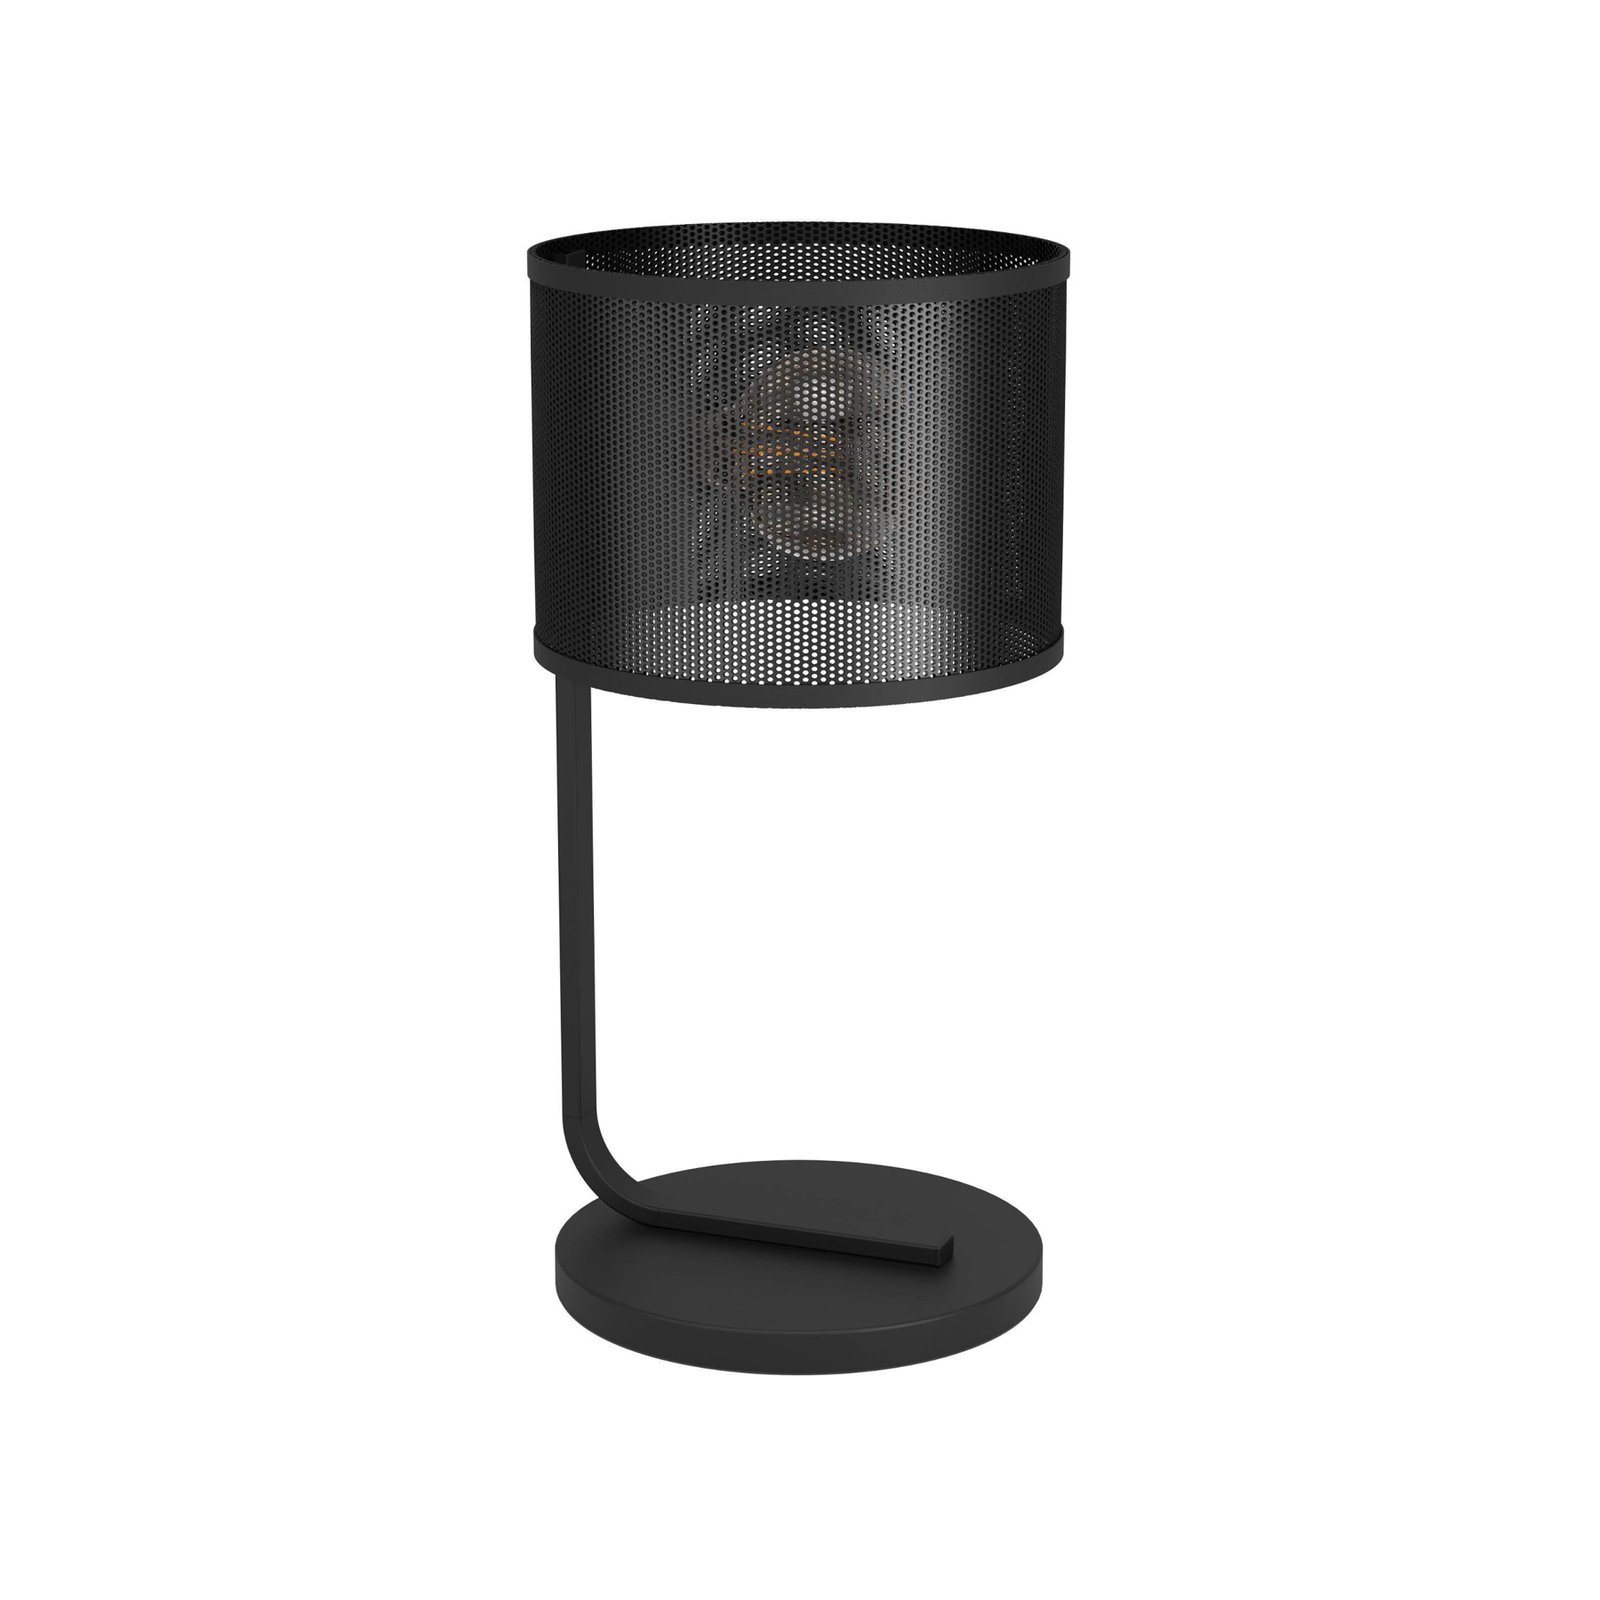 Manby table lamp, height 48.5 cm, black, steel